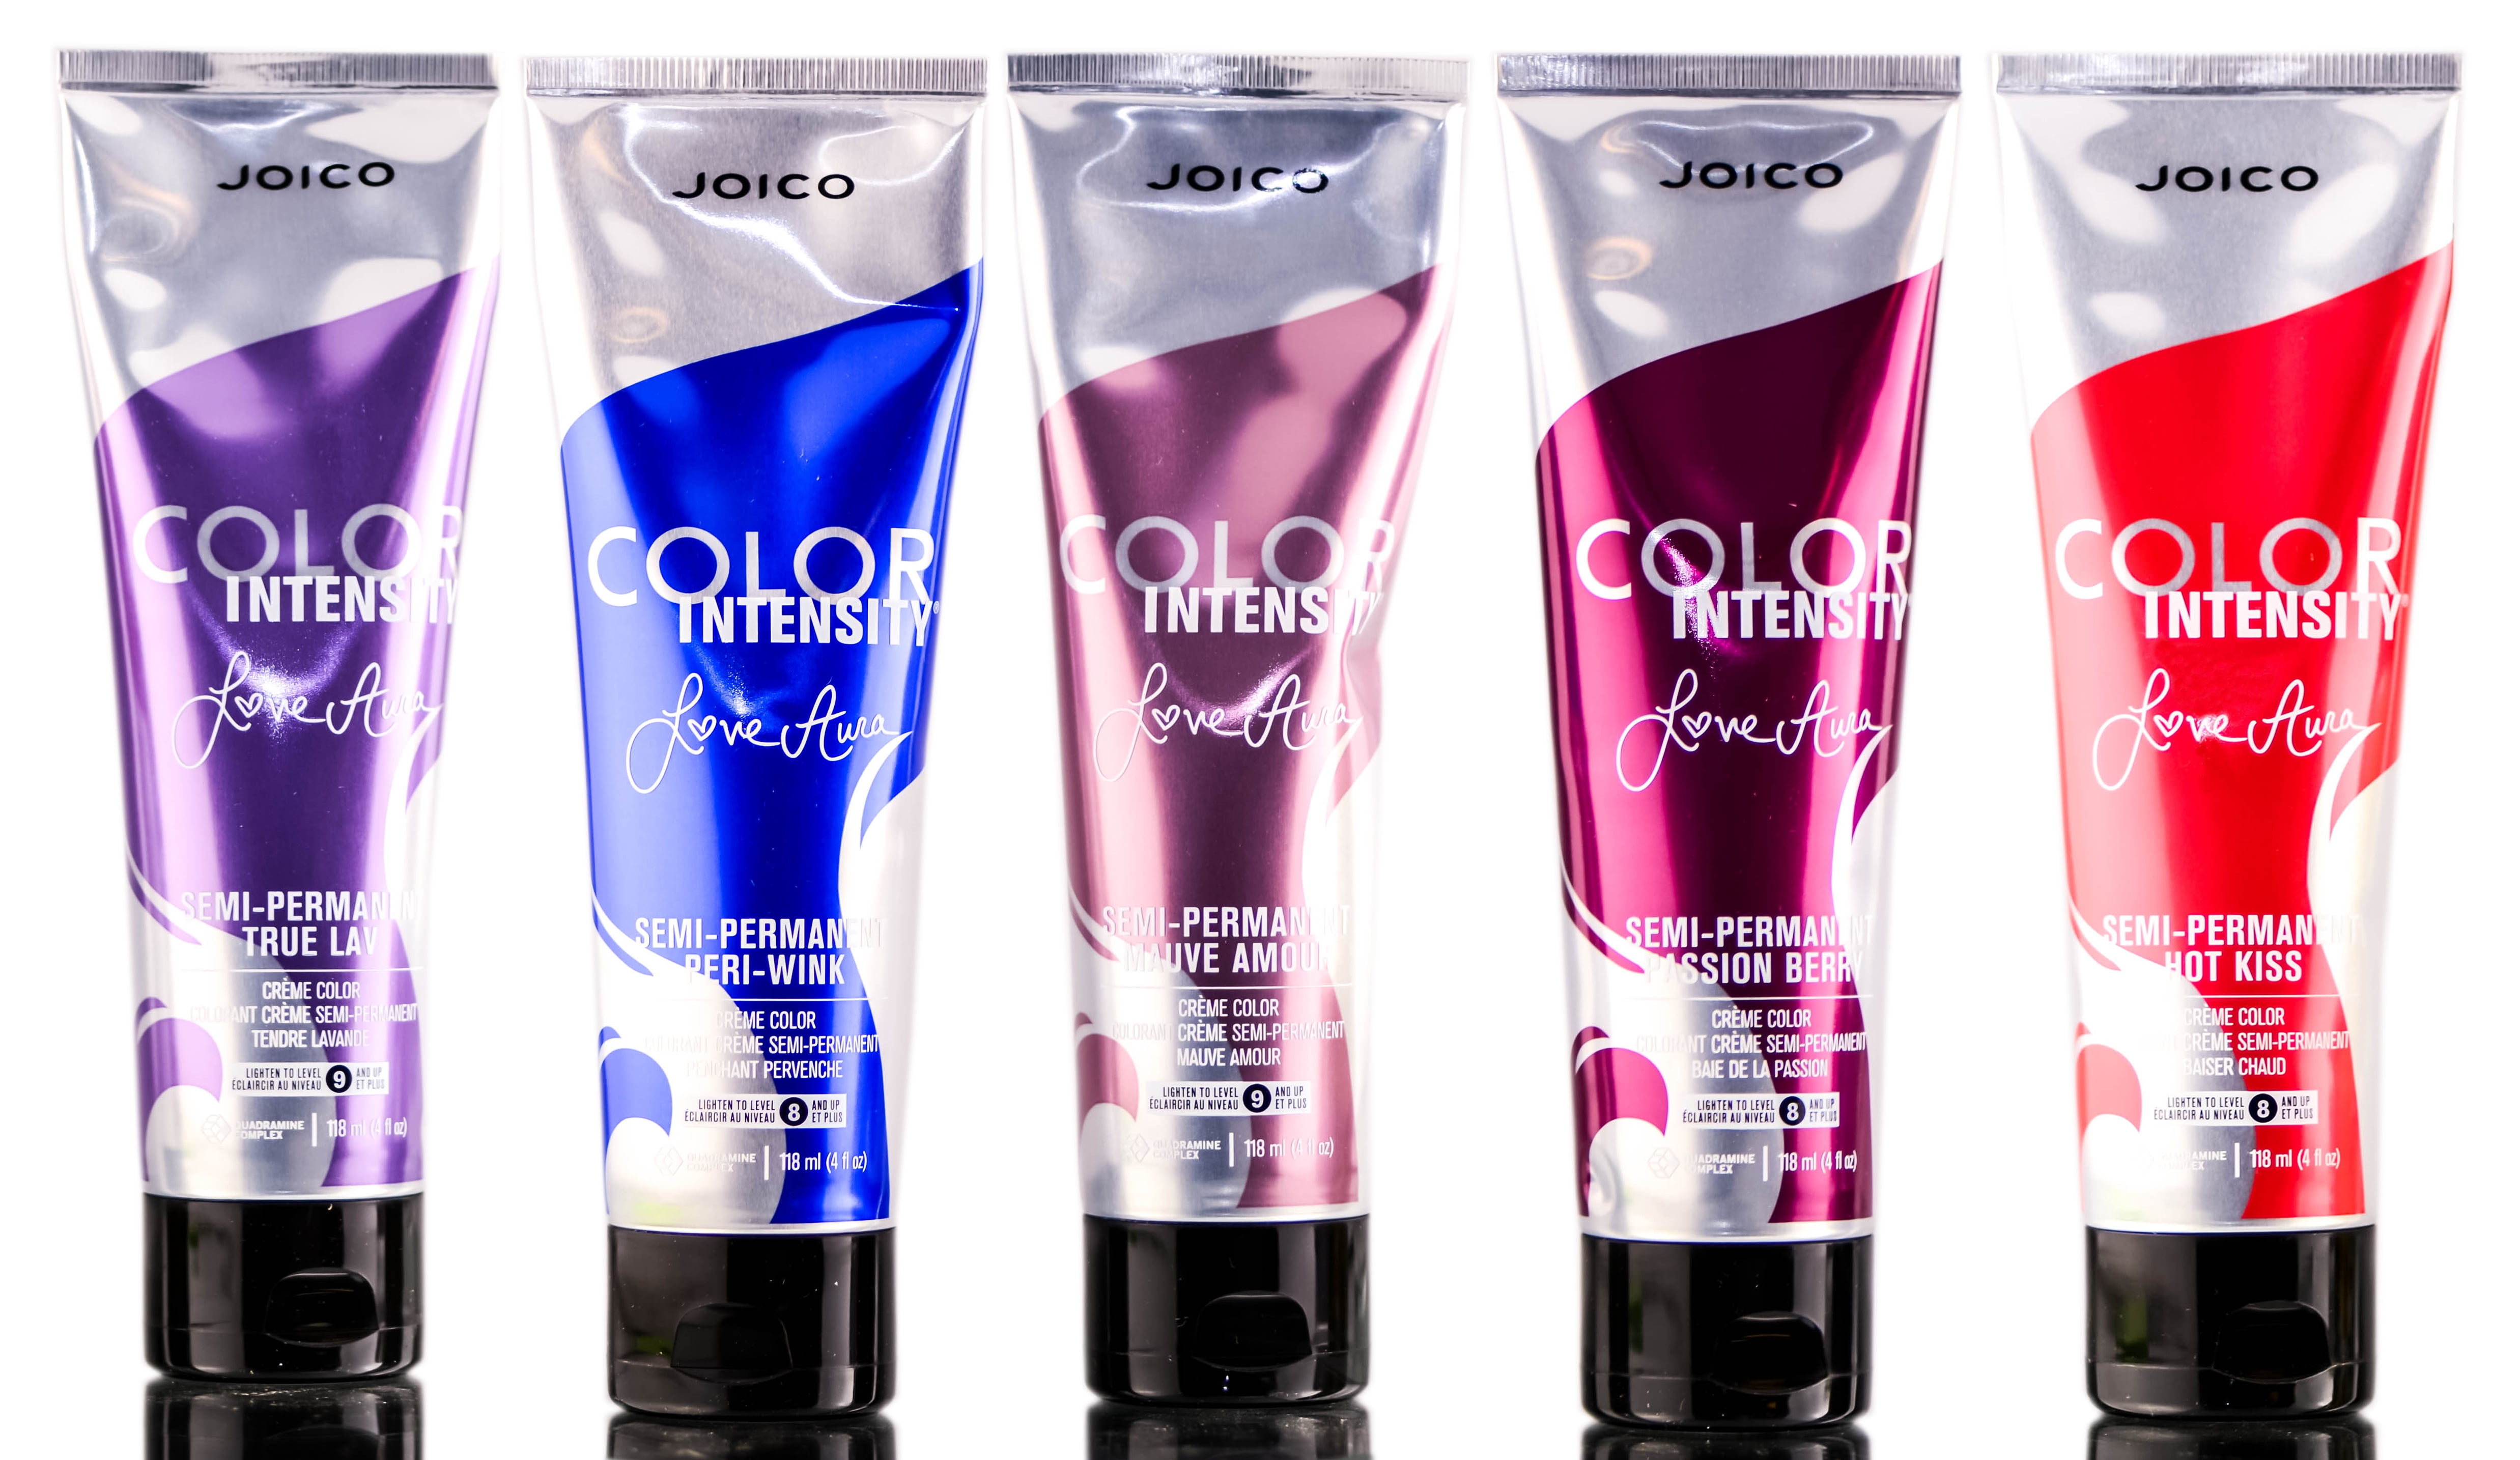 Joico Intensity Semi-Permanent Hair Color, Cobalt Blue - wide 6